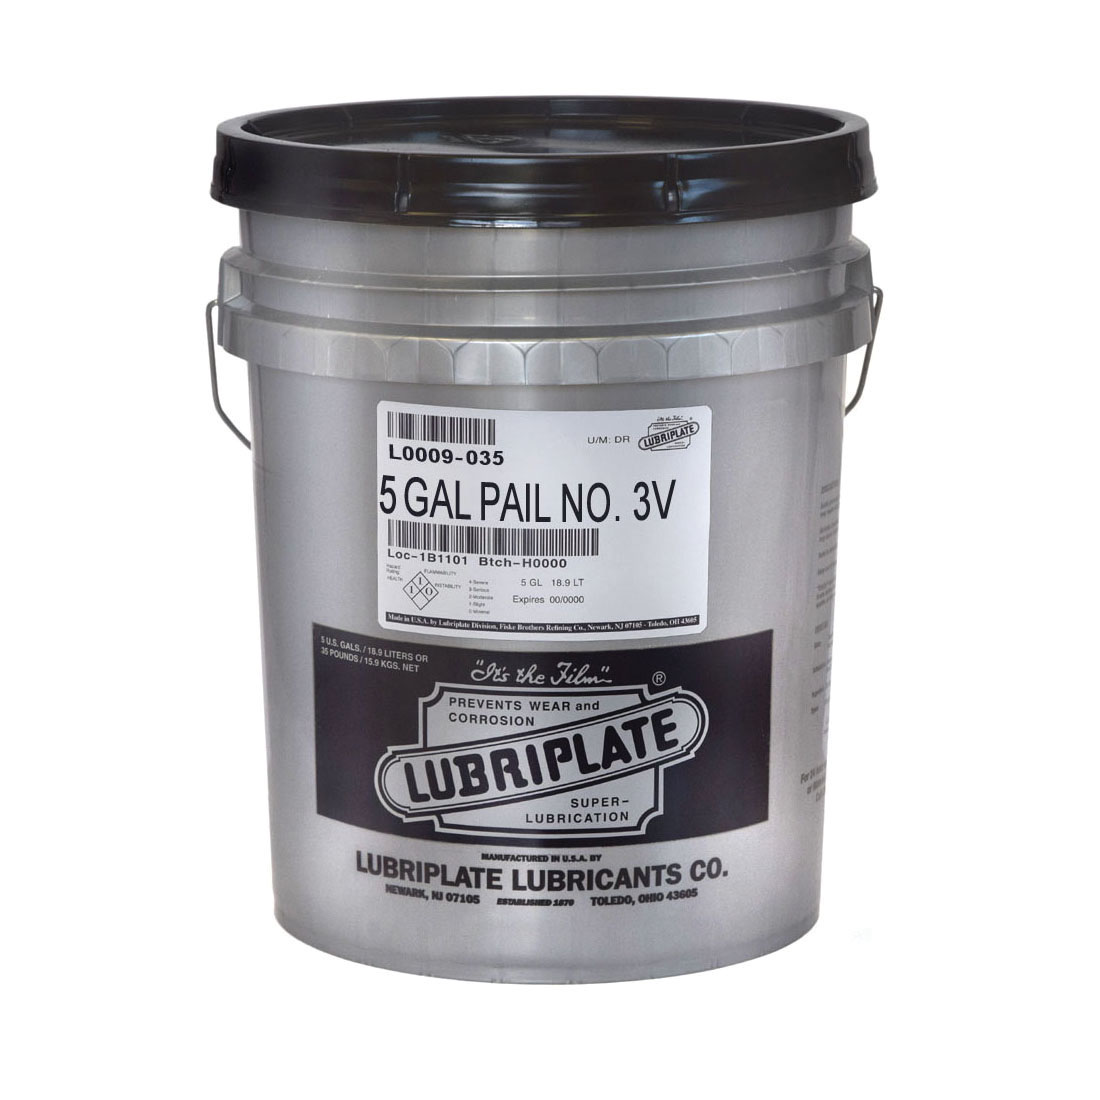 Lubriplate® L0009-035 3-V Petroleum Based Machine Oil, 35 lb Pail, Mineral Oil Odor/Scent, Liquid Form, Amber